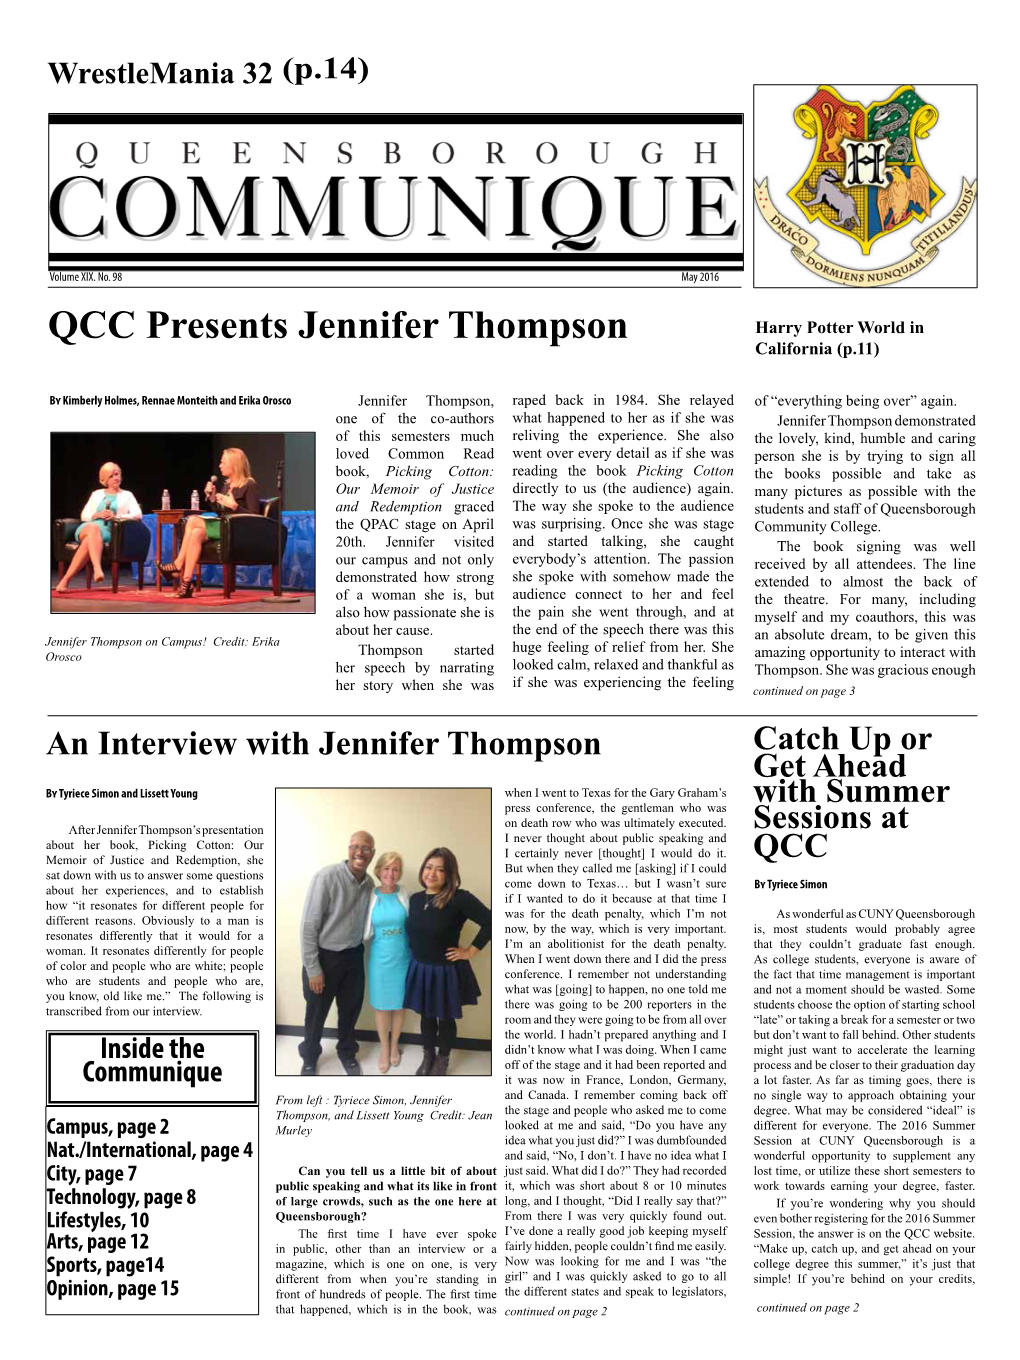 QCC Presents Jennifer Thompson Harry Potter World in California (P.11)